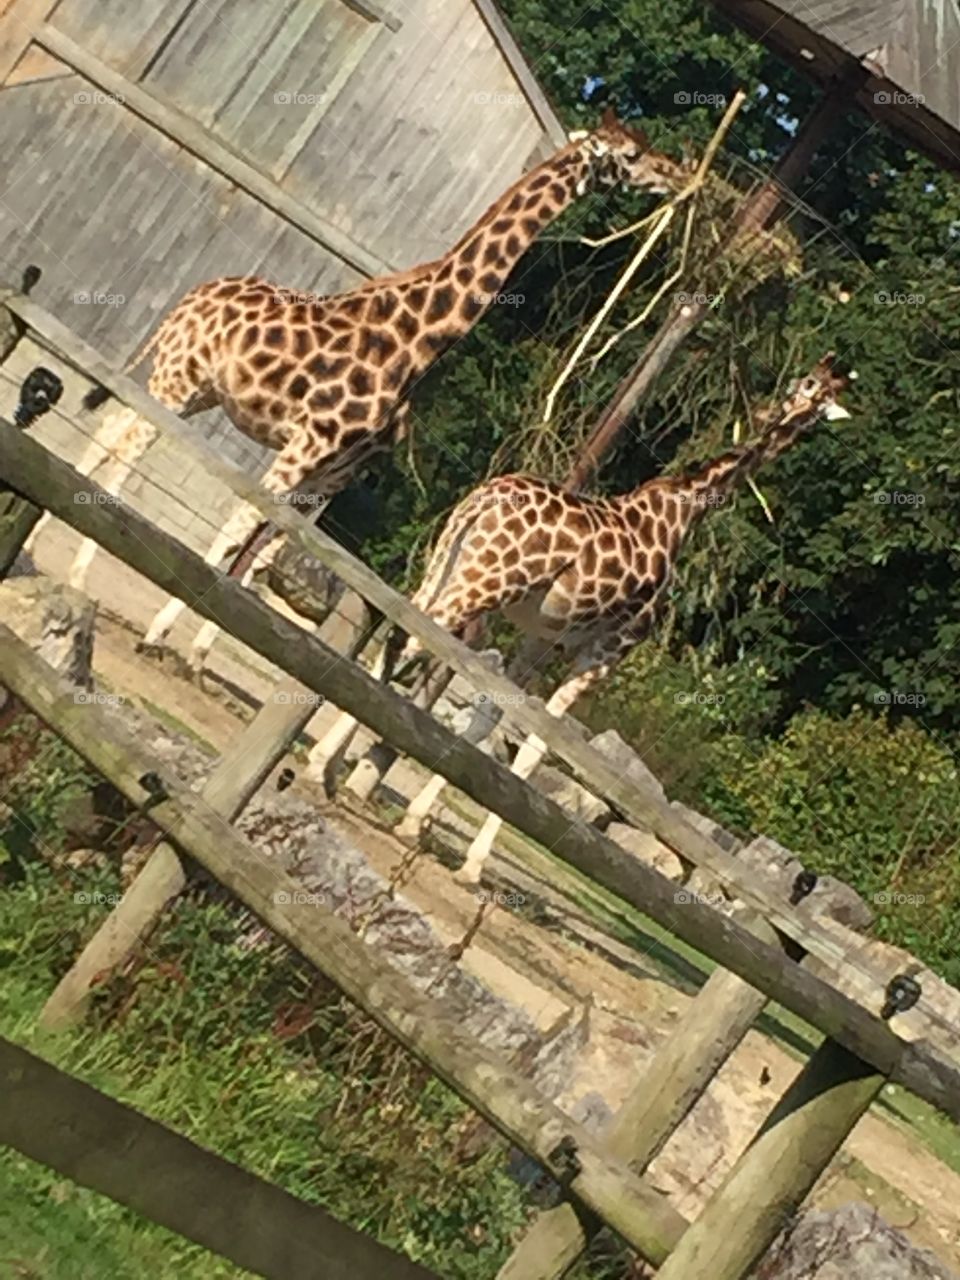 Striding along the giraffes